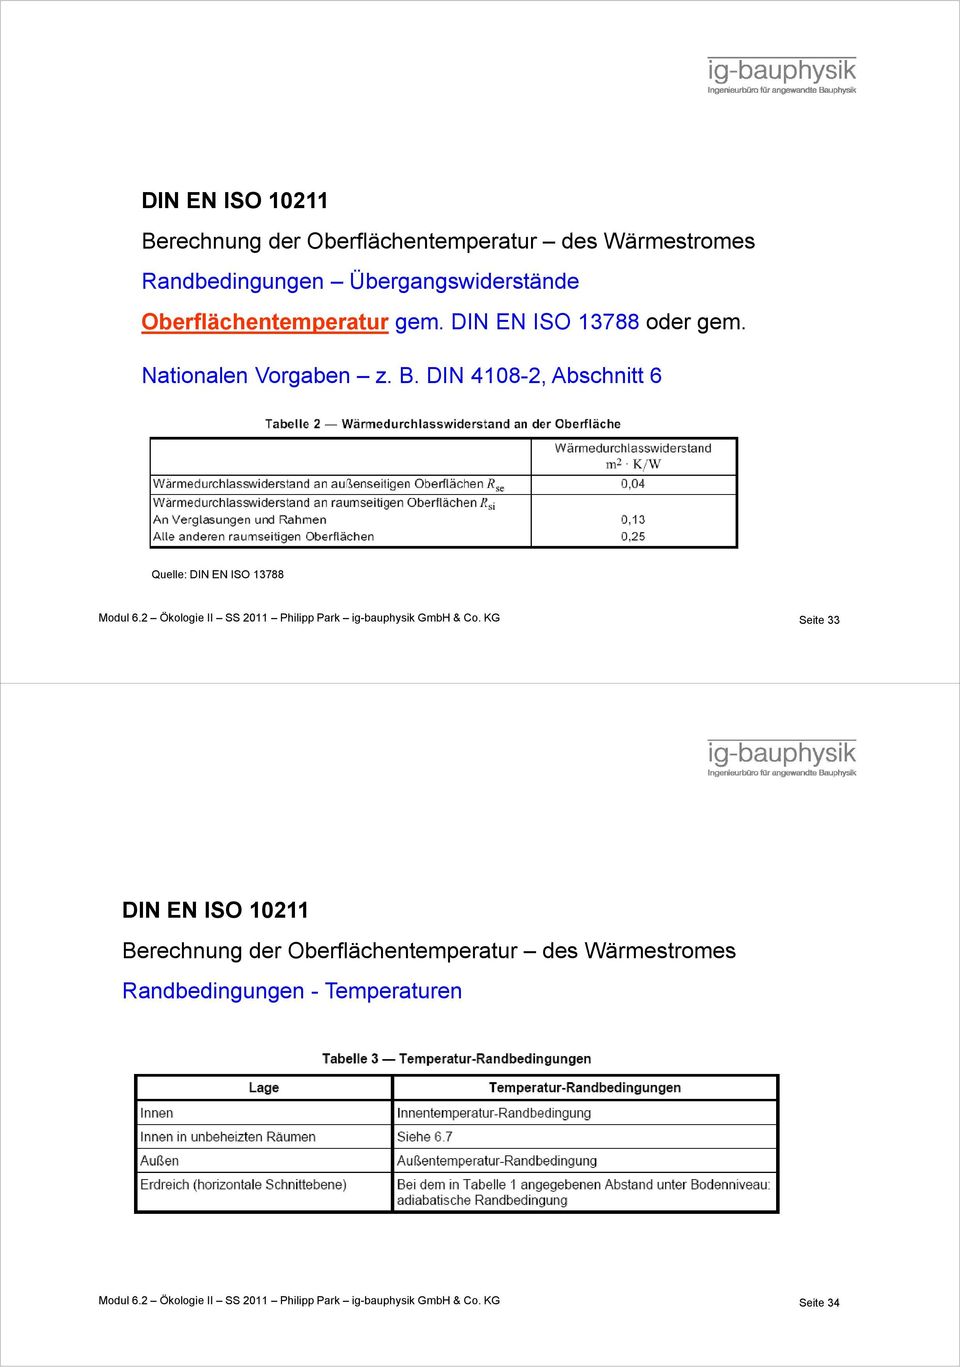 DIN 4108-2, Abschnitt 6 Quelle: DIN EN ISO 13788 Modul 6.2 Ökologie II SS 2011 Philipp Park ig-bauphysik GmbH & Co.